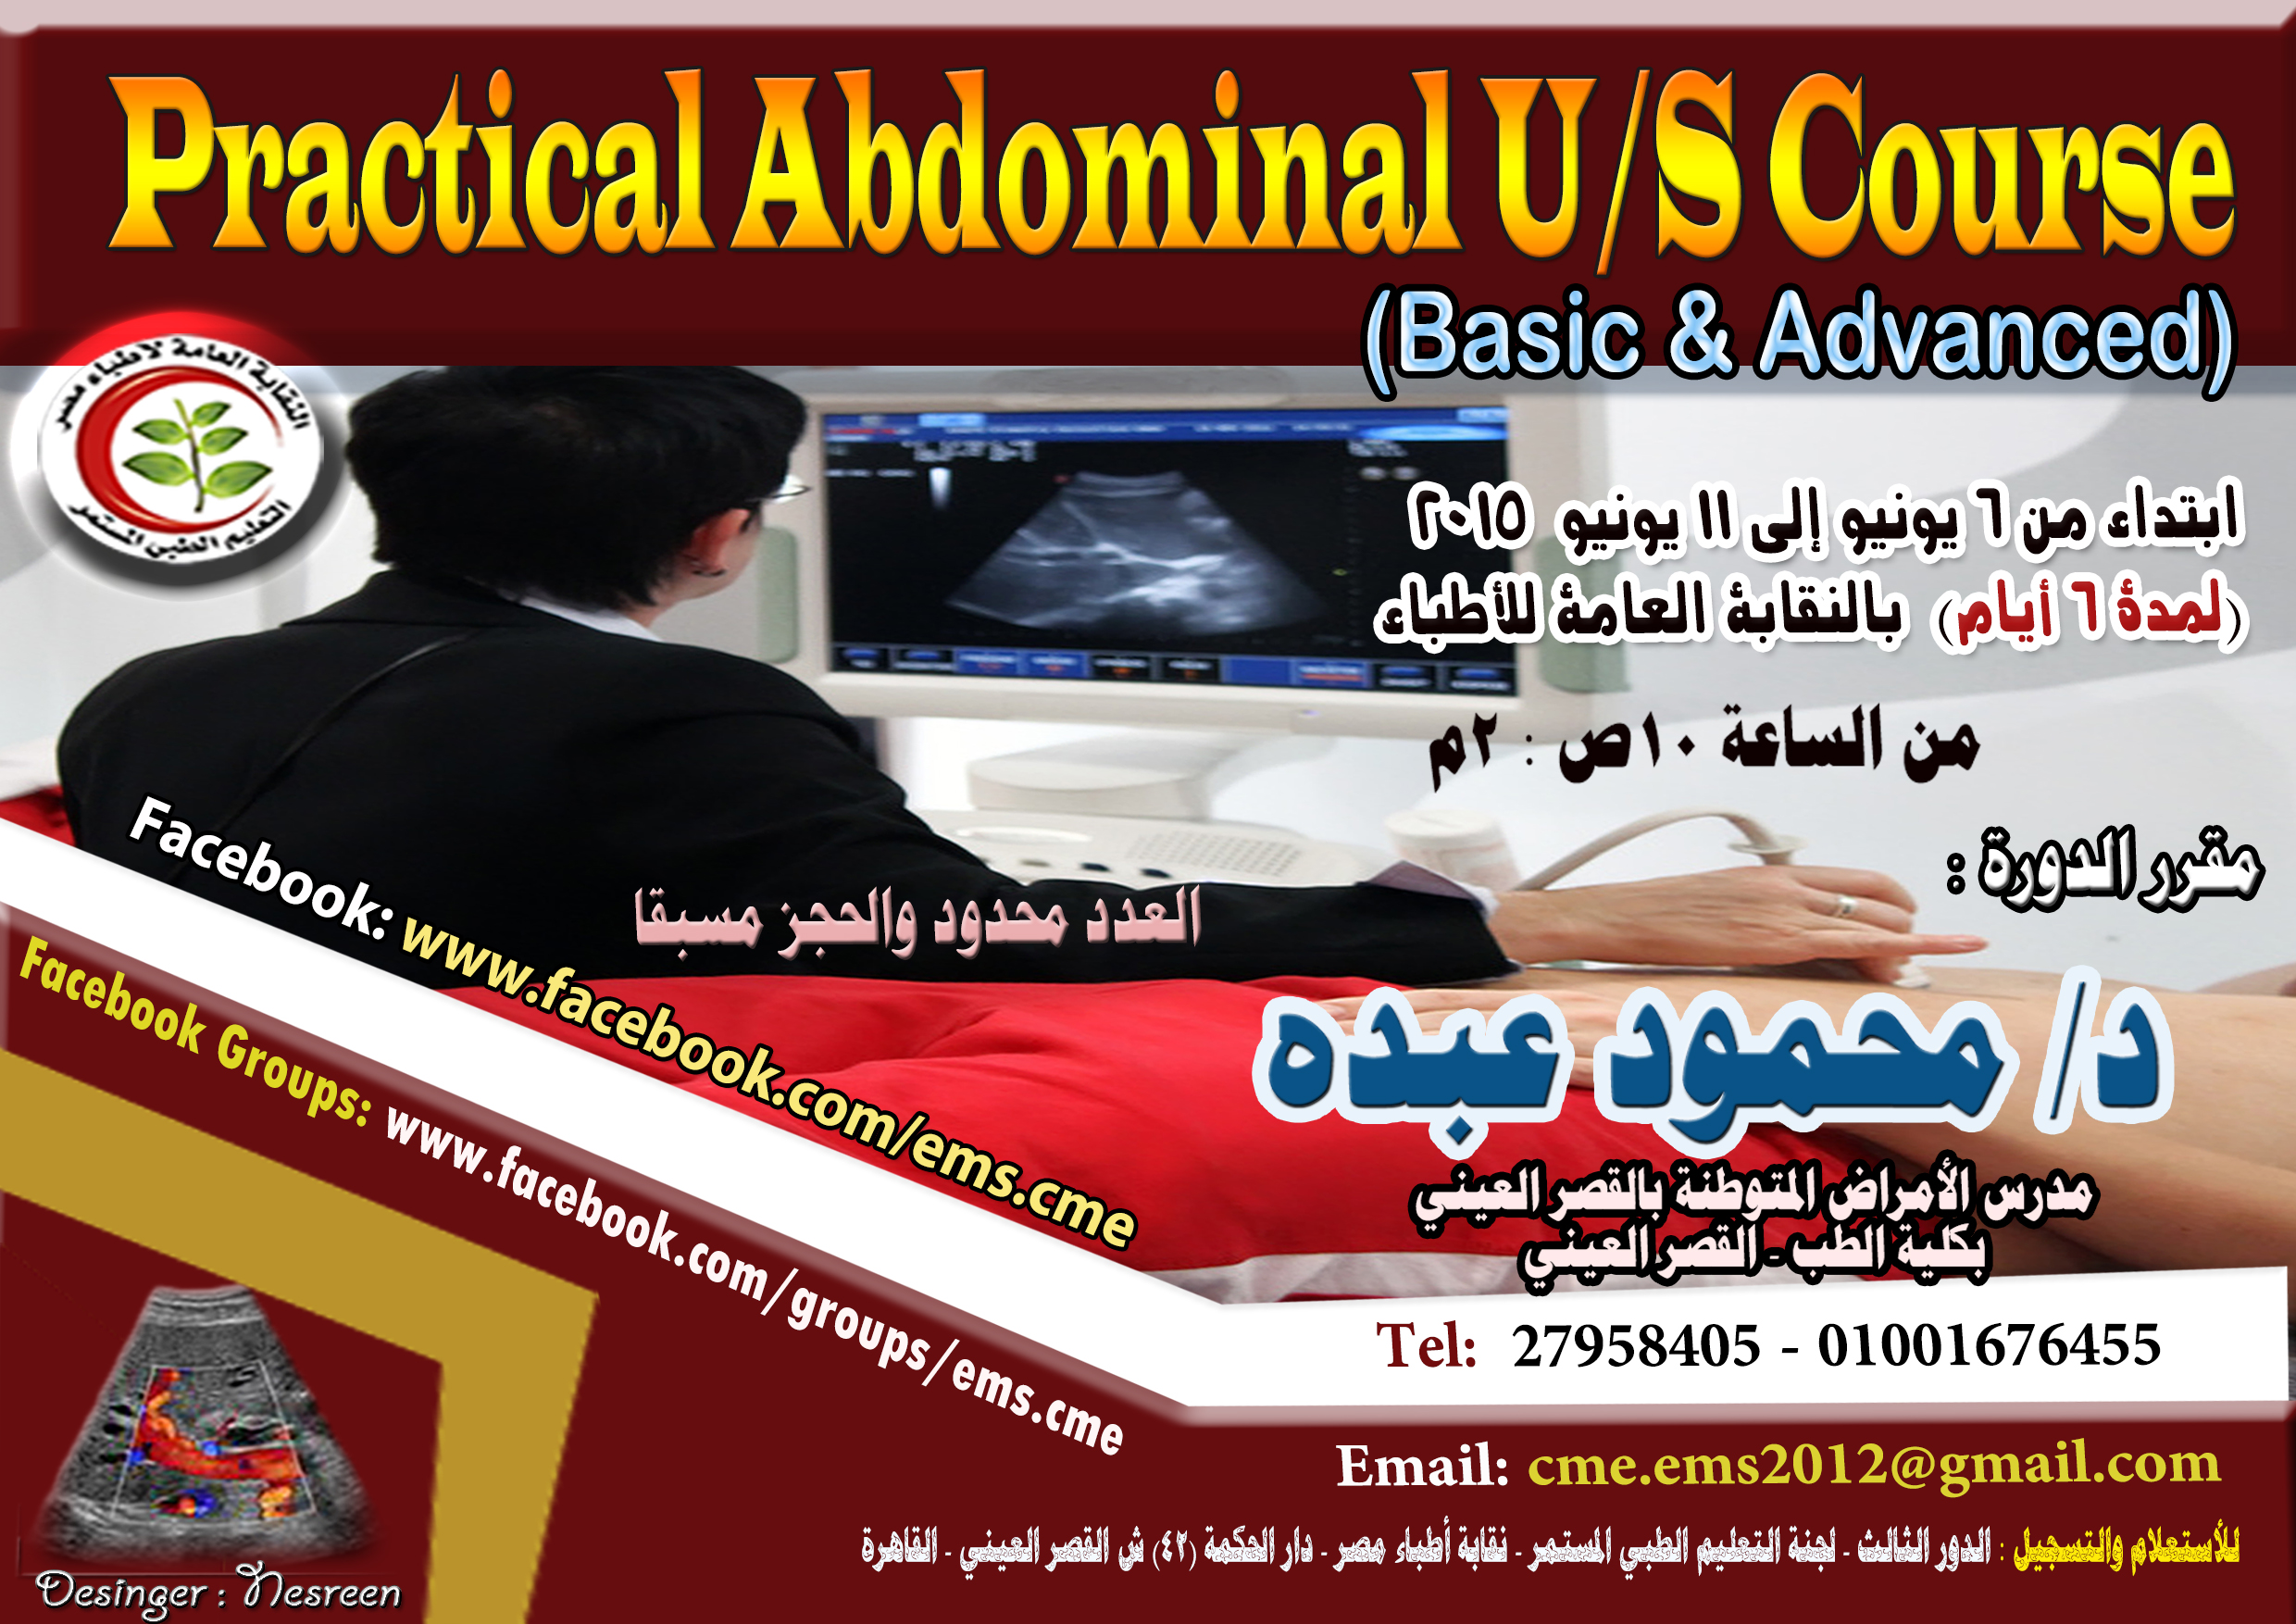 Practical Abdominal U/S Course